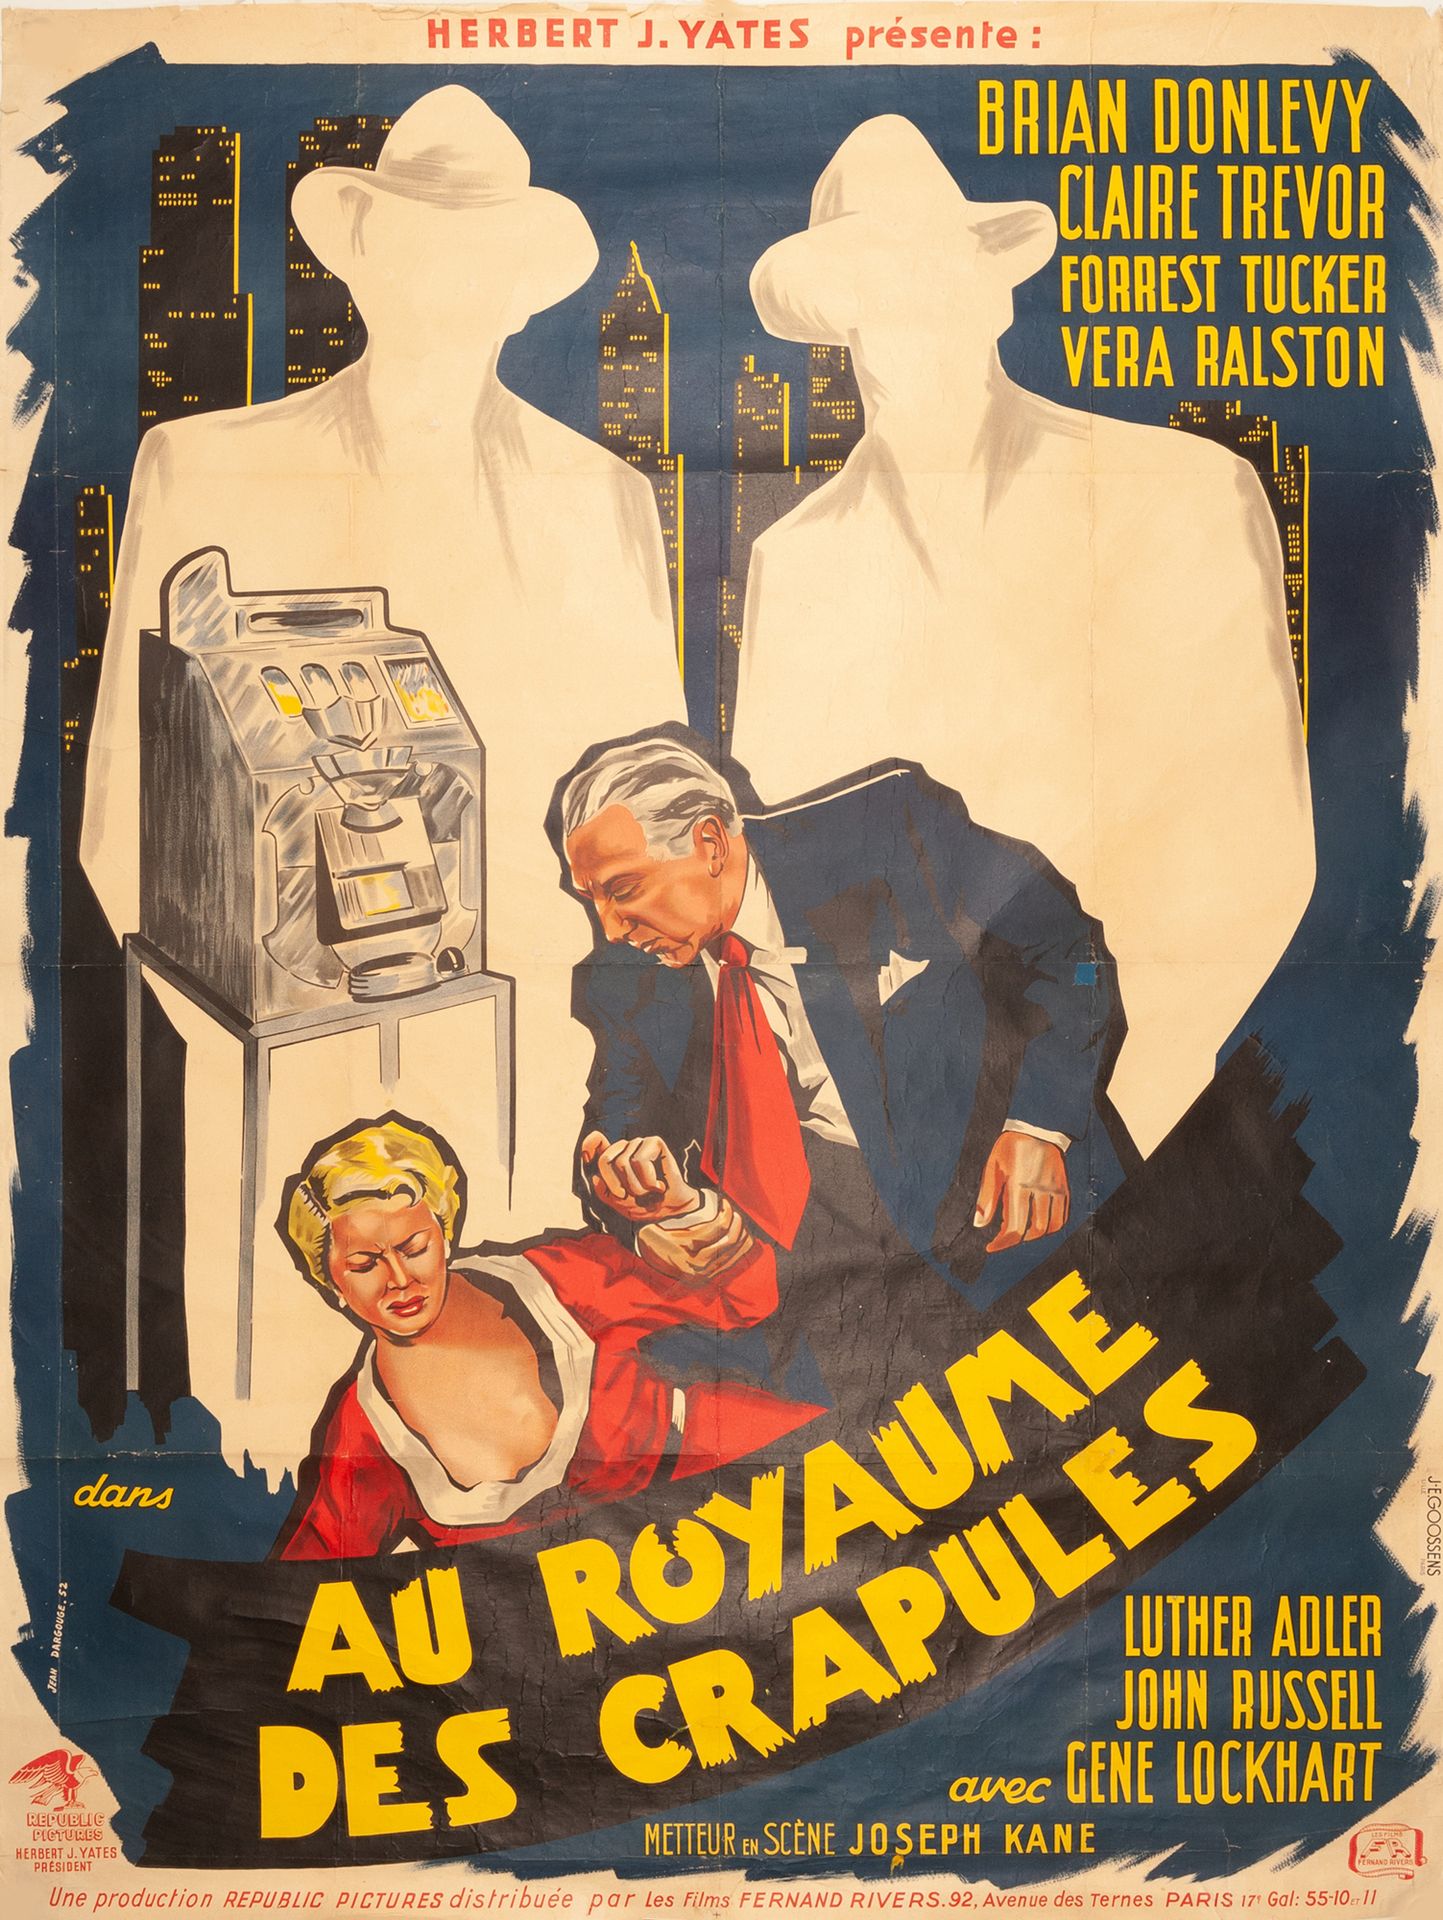 Null AU ROYAUME DES CRAPULES / HOODLUM EMPIRE Joseph Kane. 1952.
120 x 160 cm. A&hellip;